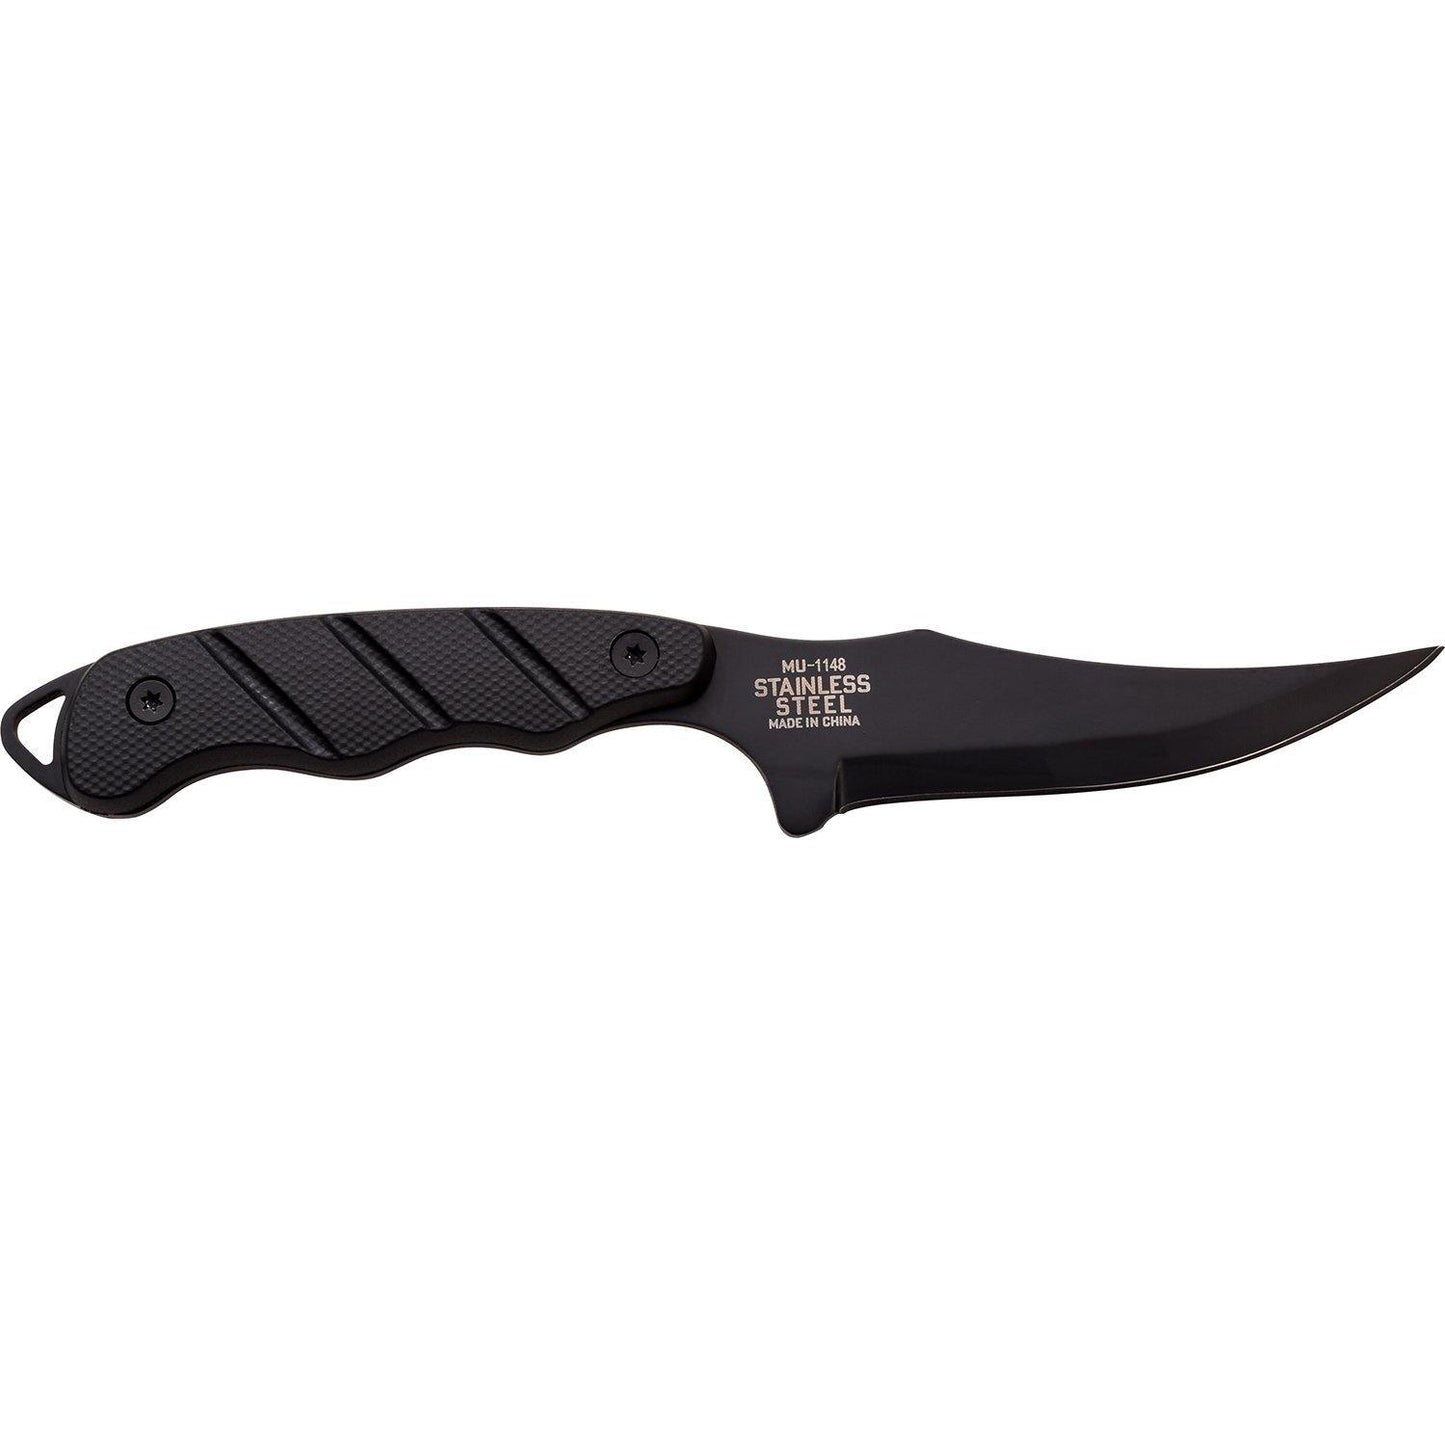 Master Usa Persian Fine Fixed Blade Knife - 8.5 Inches Overall Molded Sheath #mu-1148 - Xhunter New Zealand